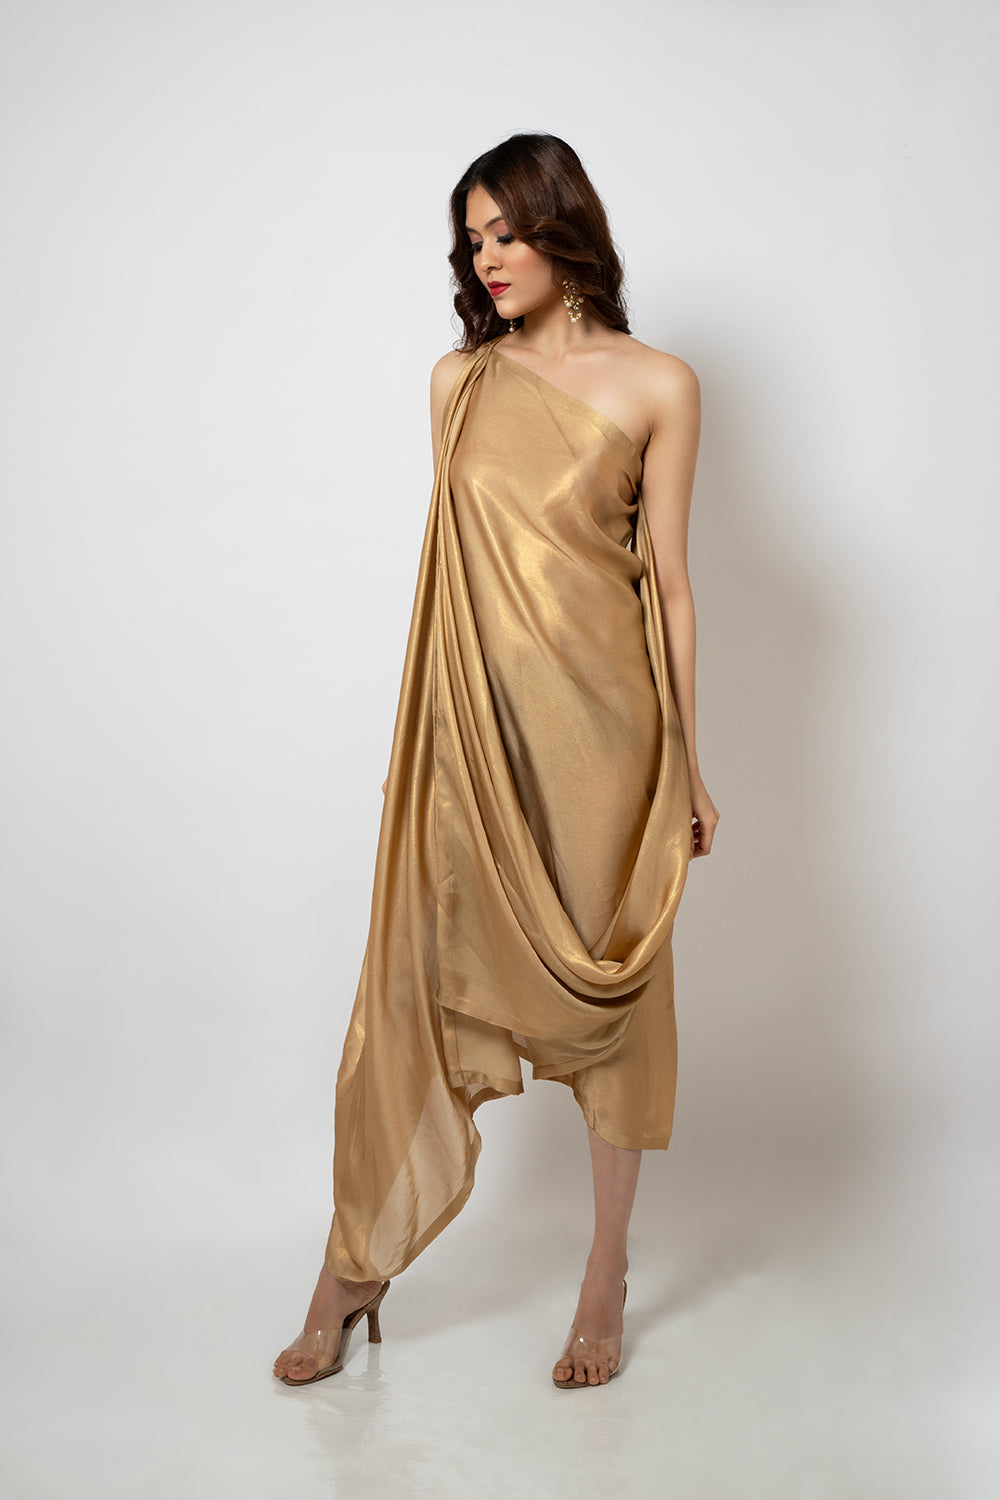 4. A zero waste gold shimmer georgette dress